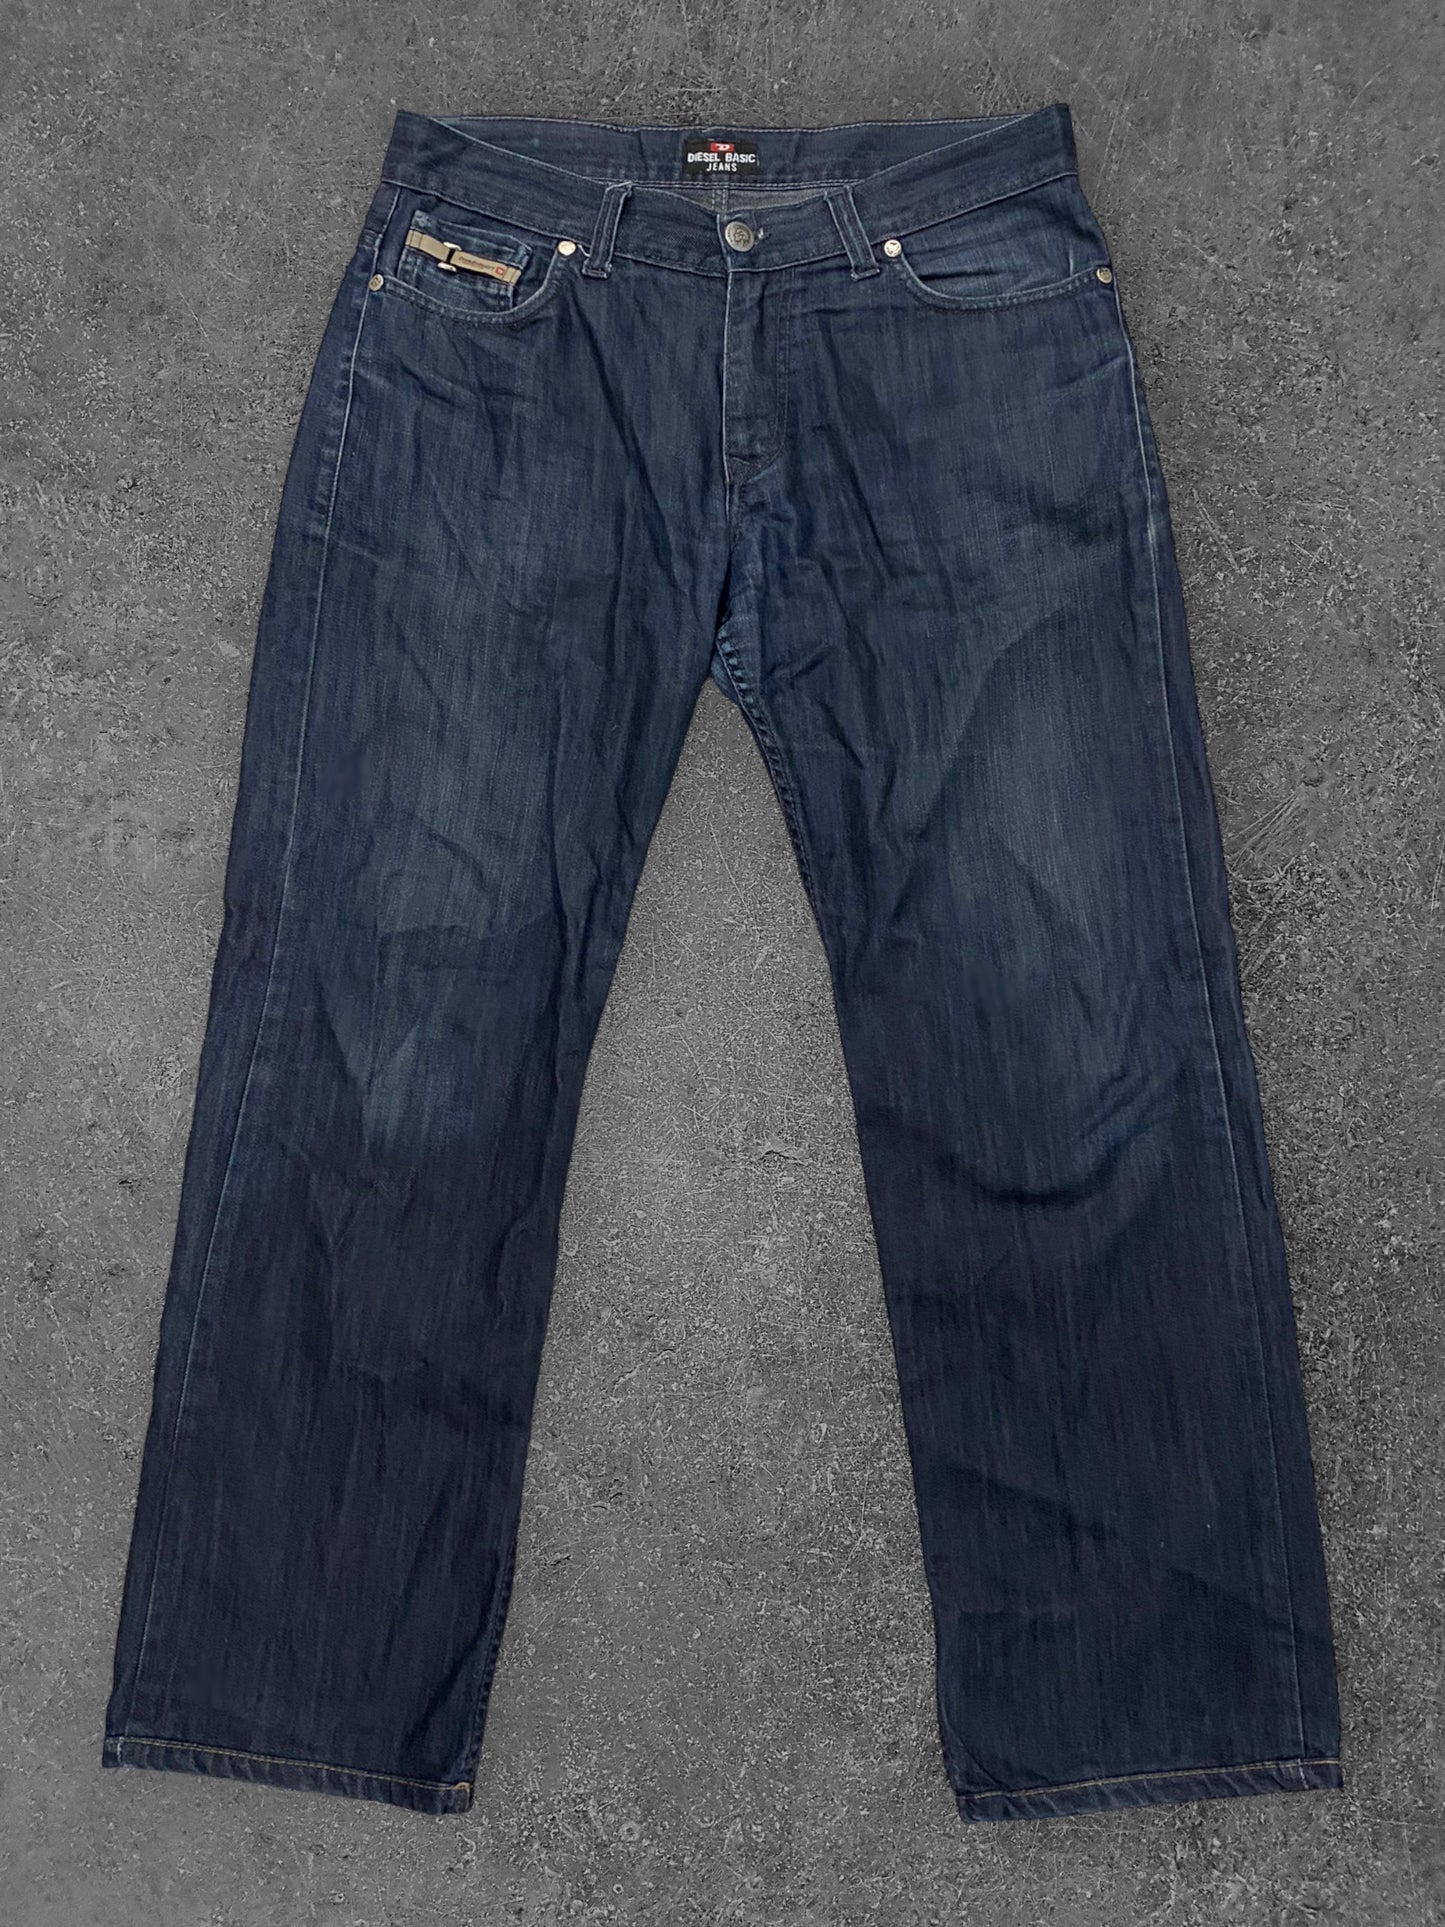 Vintage Diesel Basic Jeans (W34, L32)